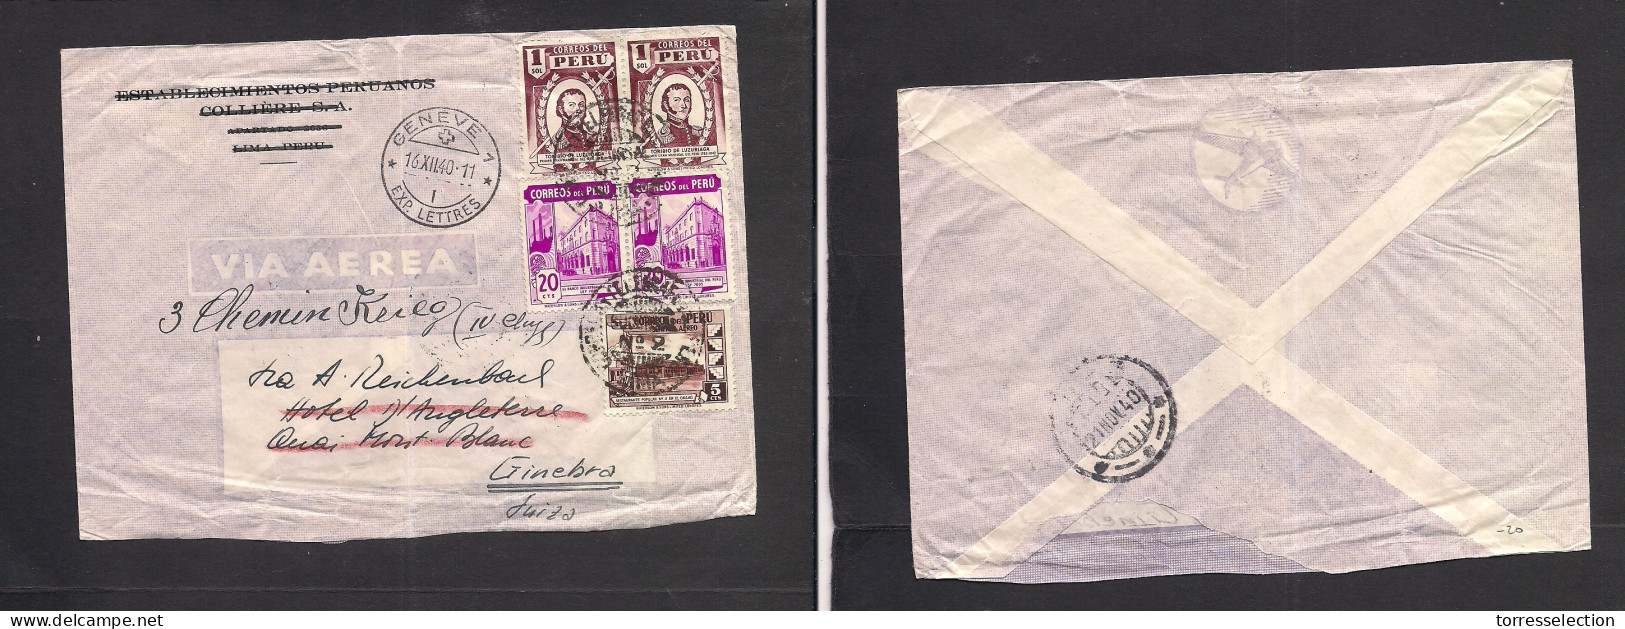 PERU. 1940. Lima Suc 2 - Switzerland, Geneva (16 Dec) Air Multifkd Envelope, Fwded 2,45 Soles Rate. XSALE. - Peru